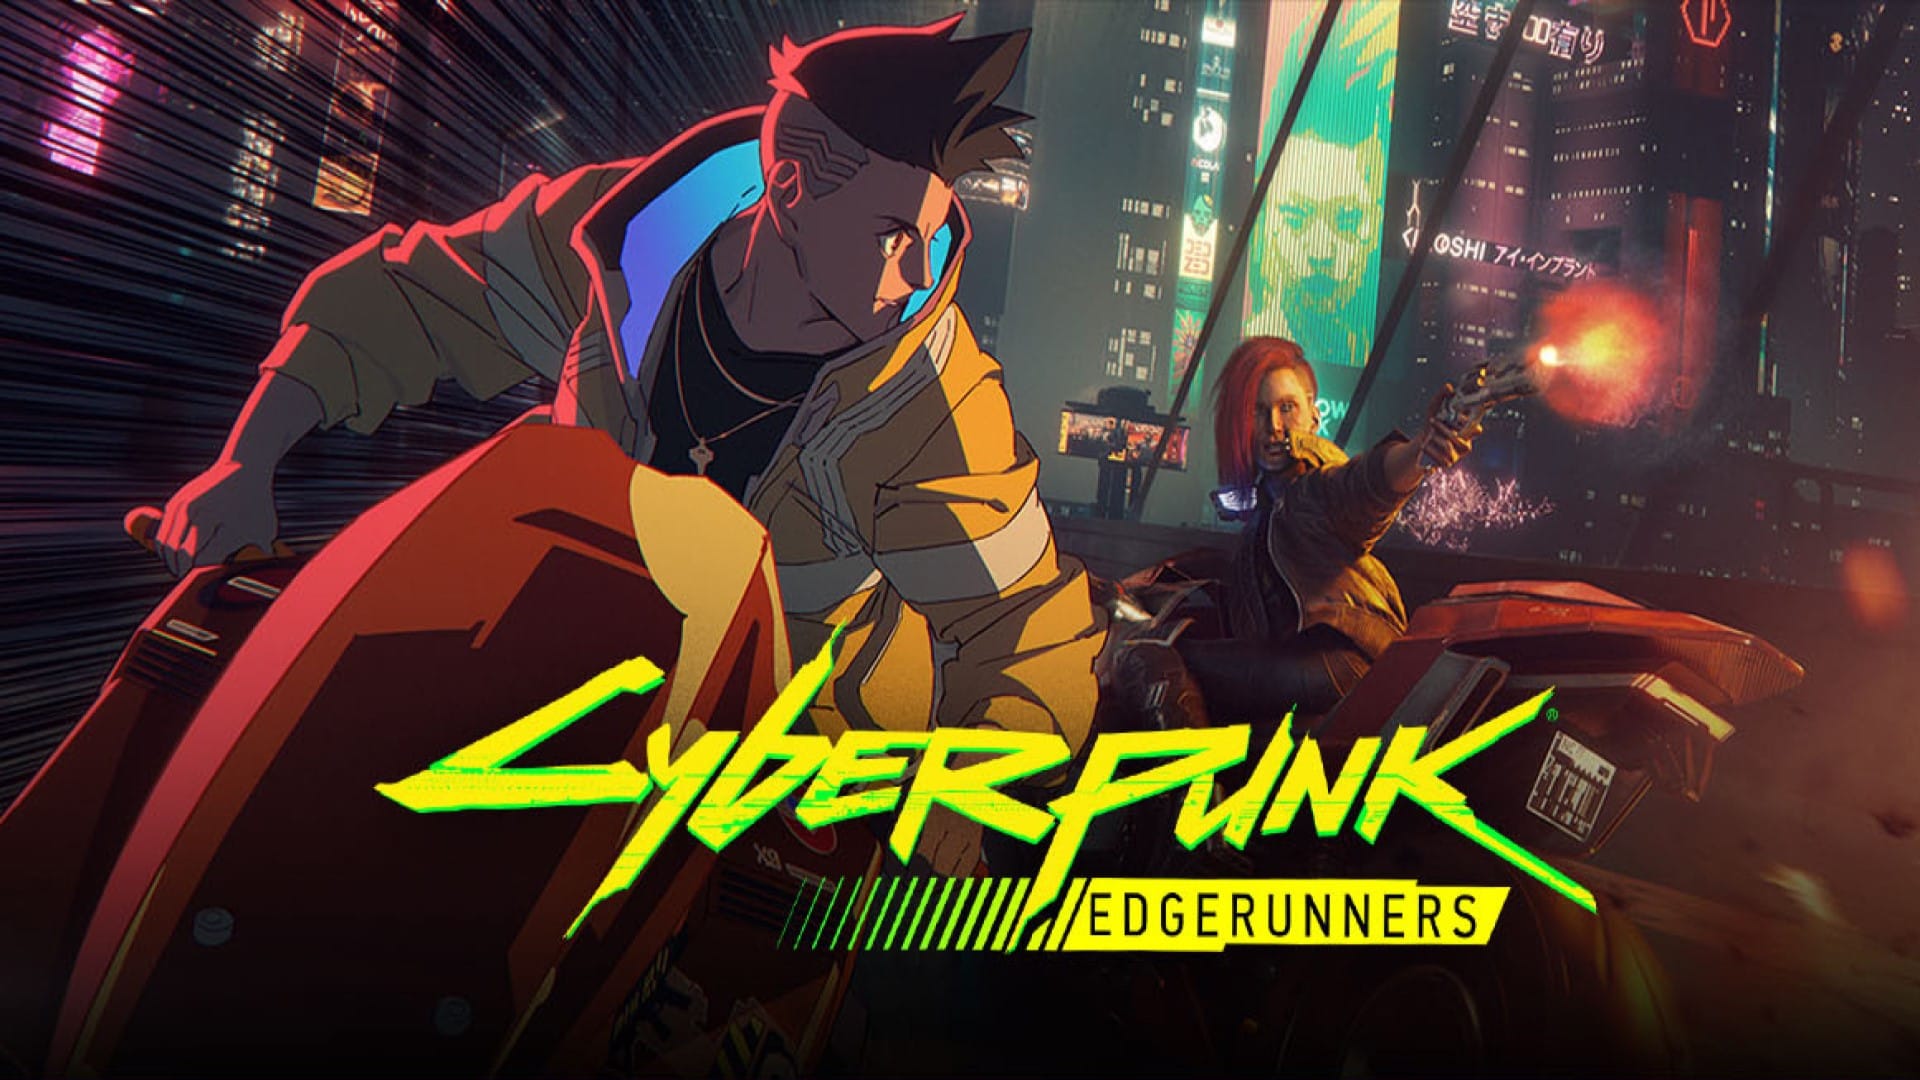 Netflix And CD Projekt Red Announce Cyberpunk 2077 Anime